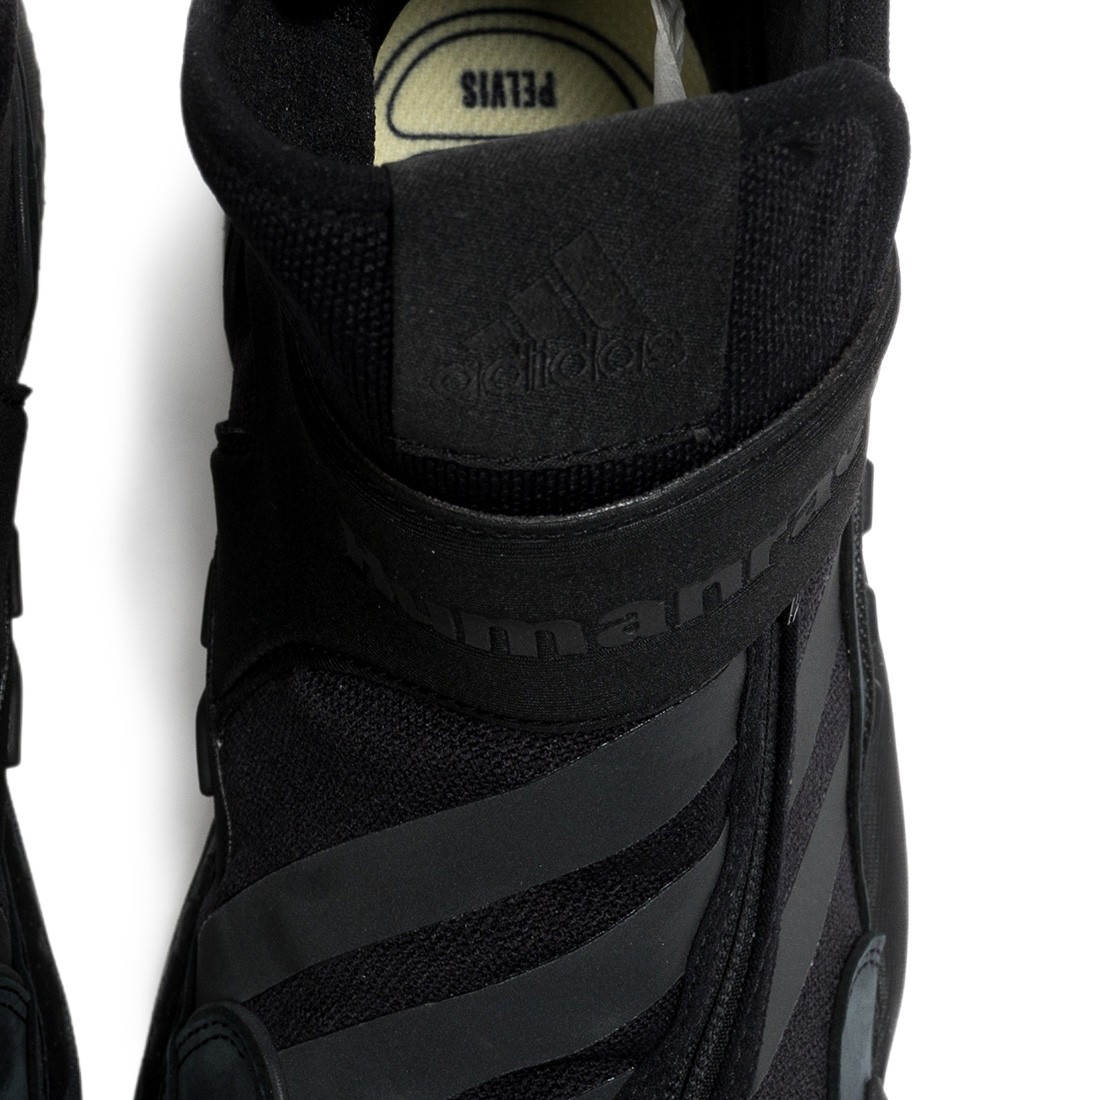 Men's shoes adidas x Pharrell Williams 0 TO 60 Core Black/ Core